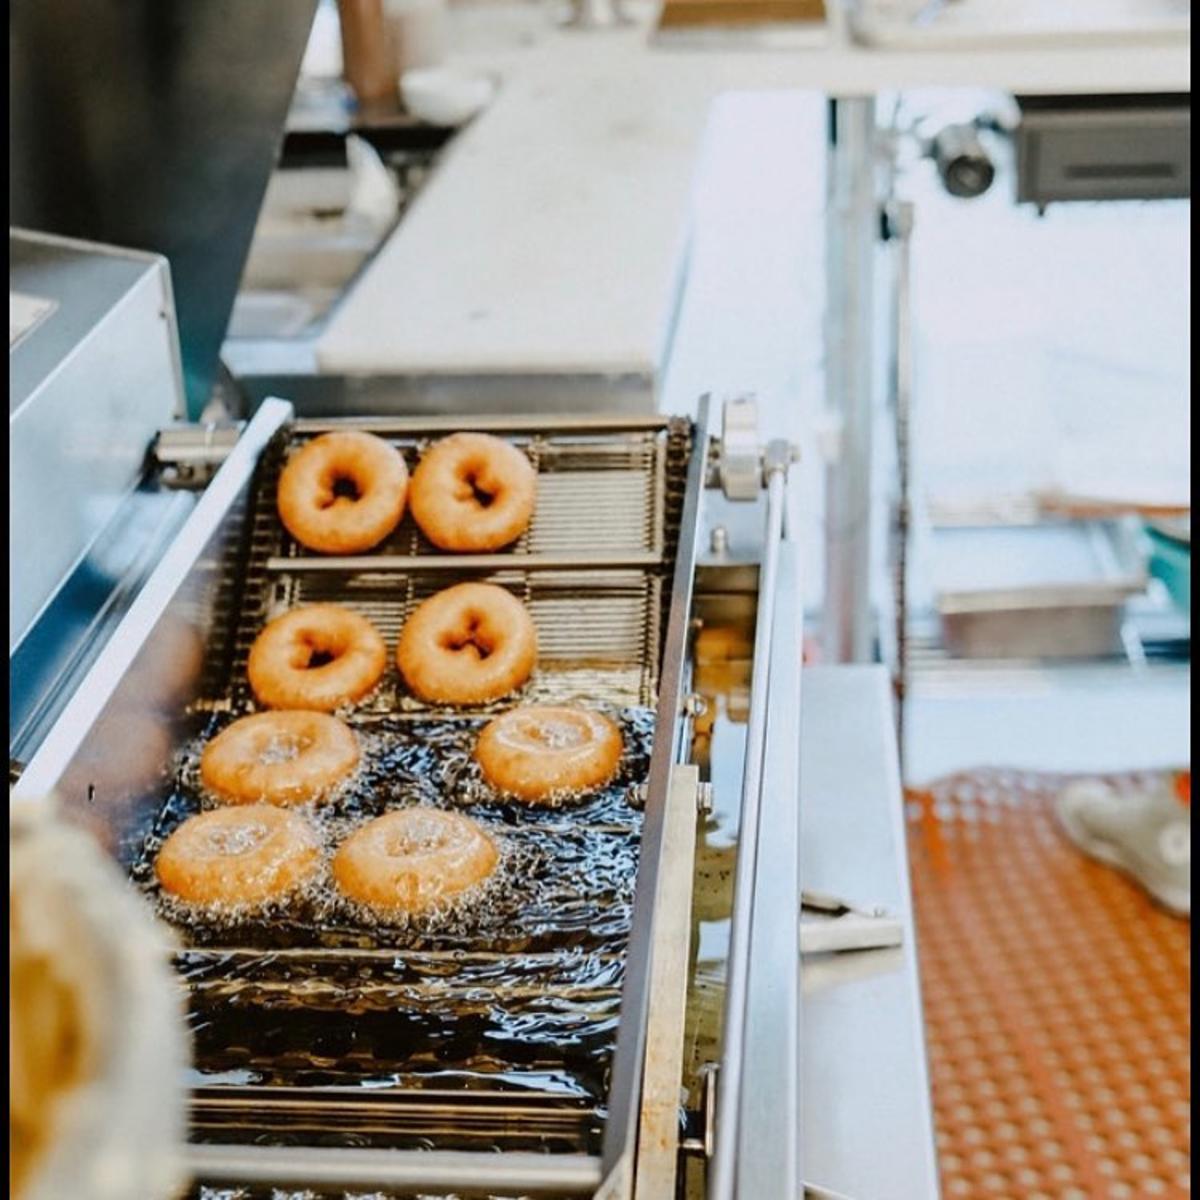 FoCo DoCo donuts in fryer